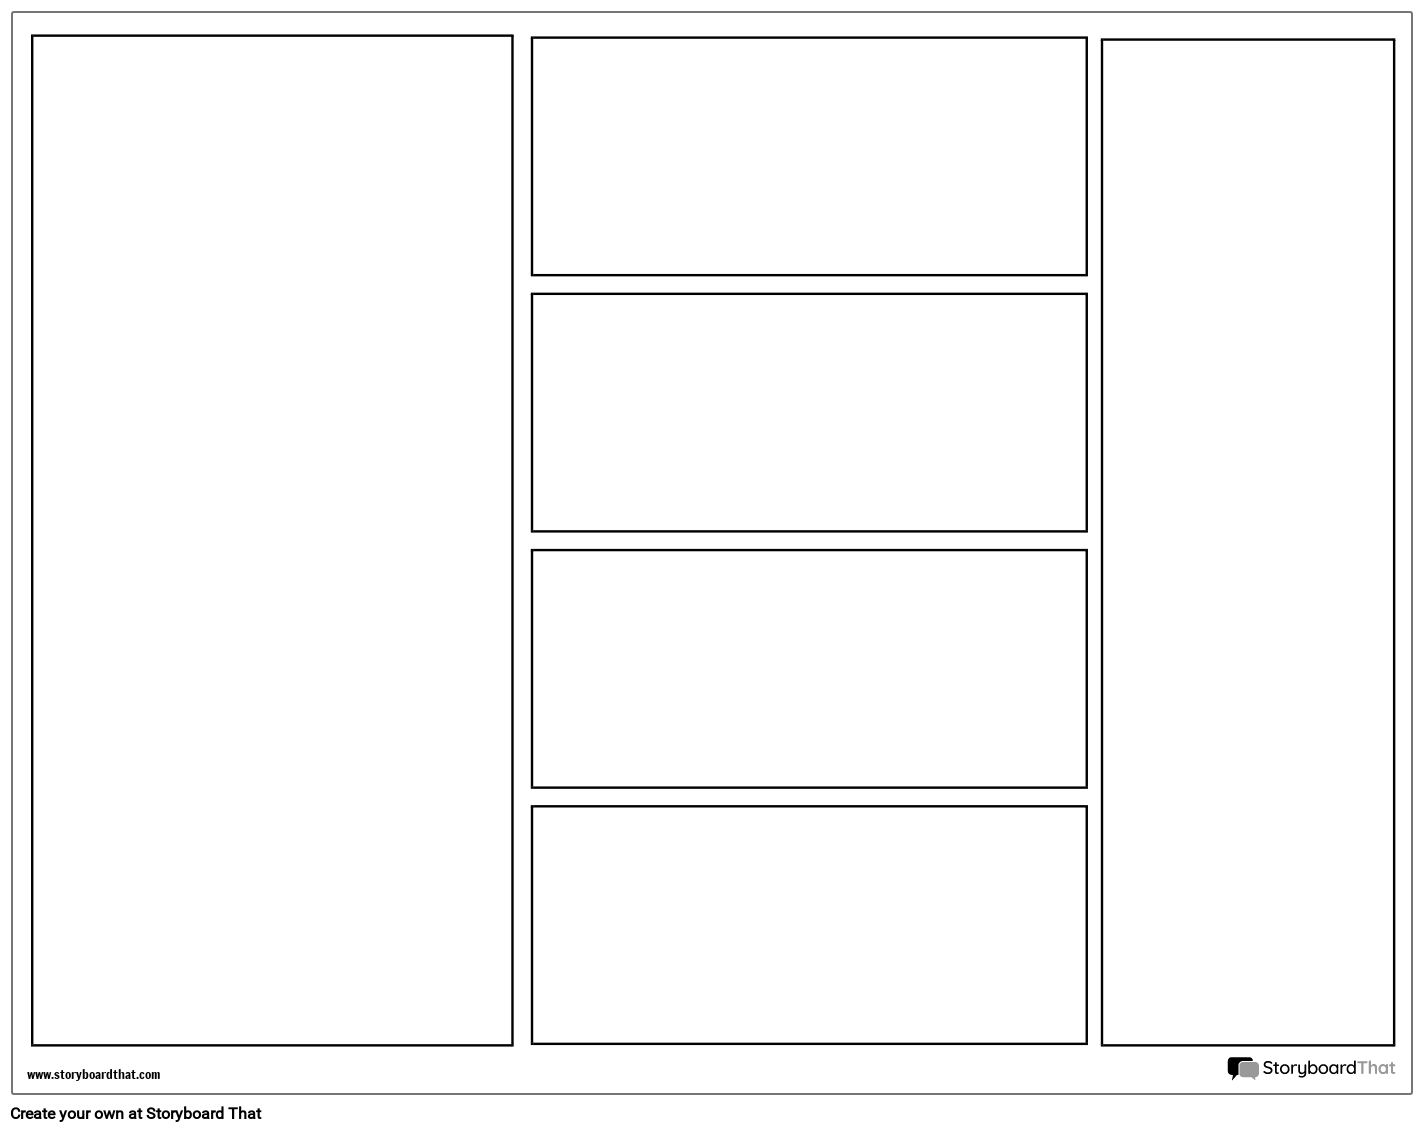 graphic-novel-layout-3-storyboard-o-de-examples